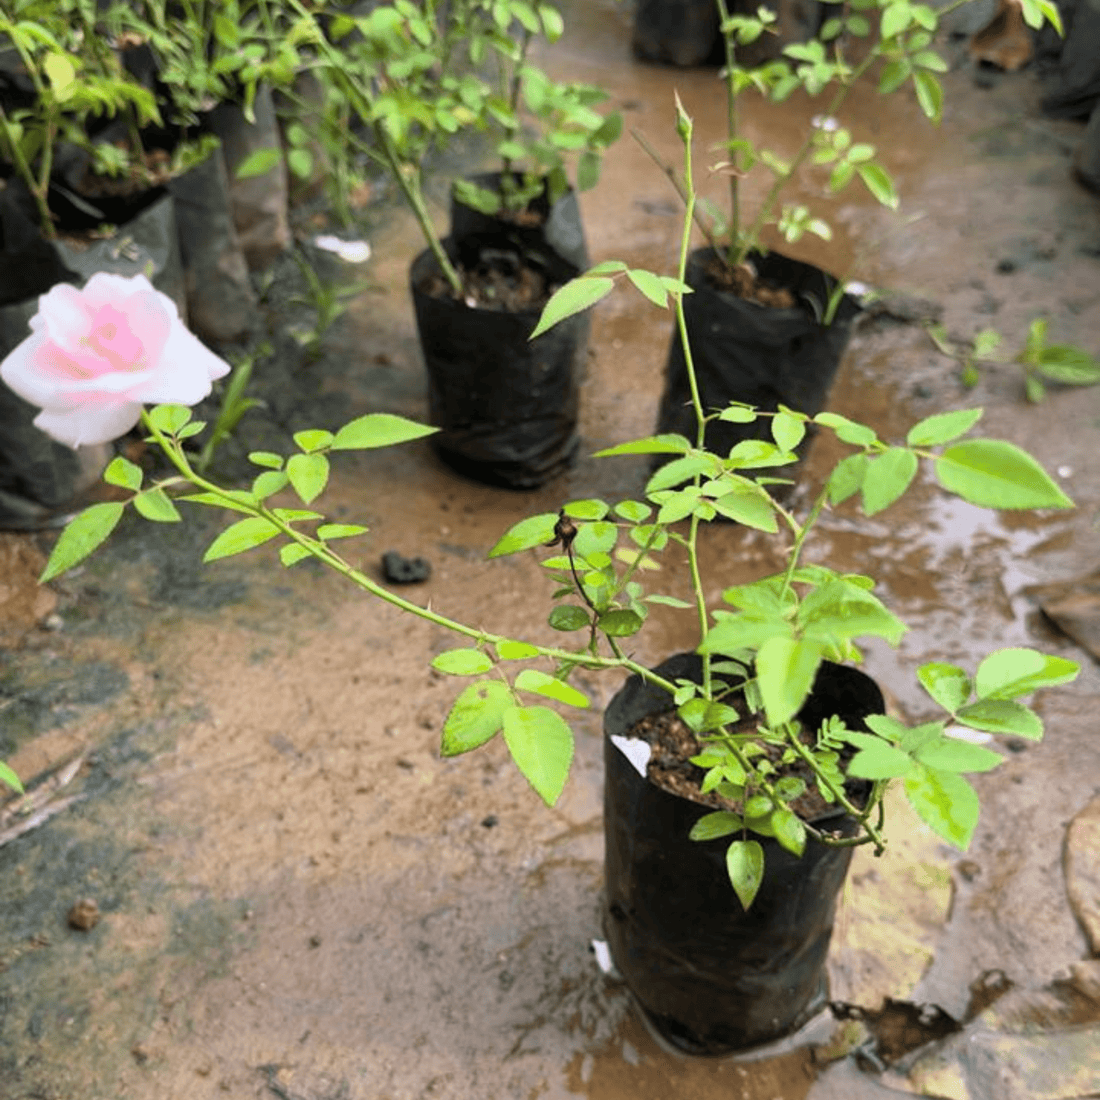 Light Pink Desi (Nadan or nattu) Rose Live Plant